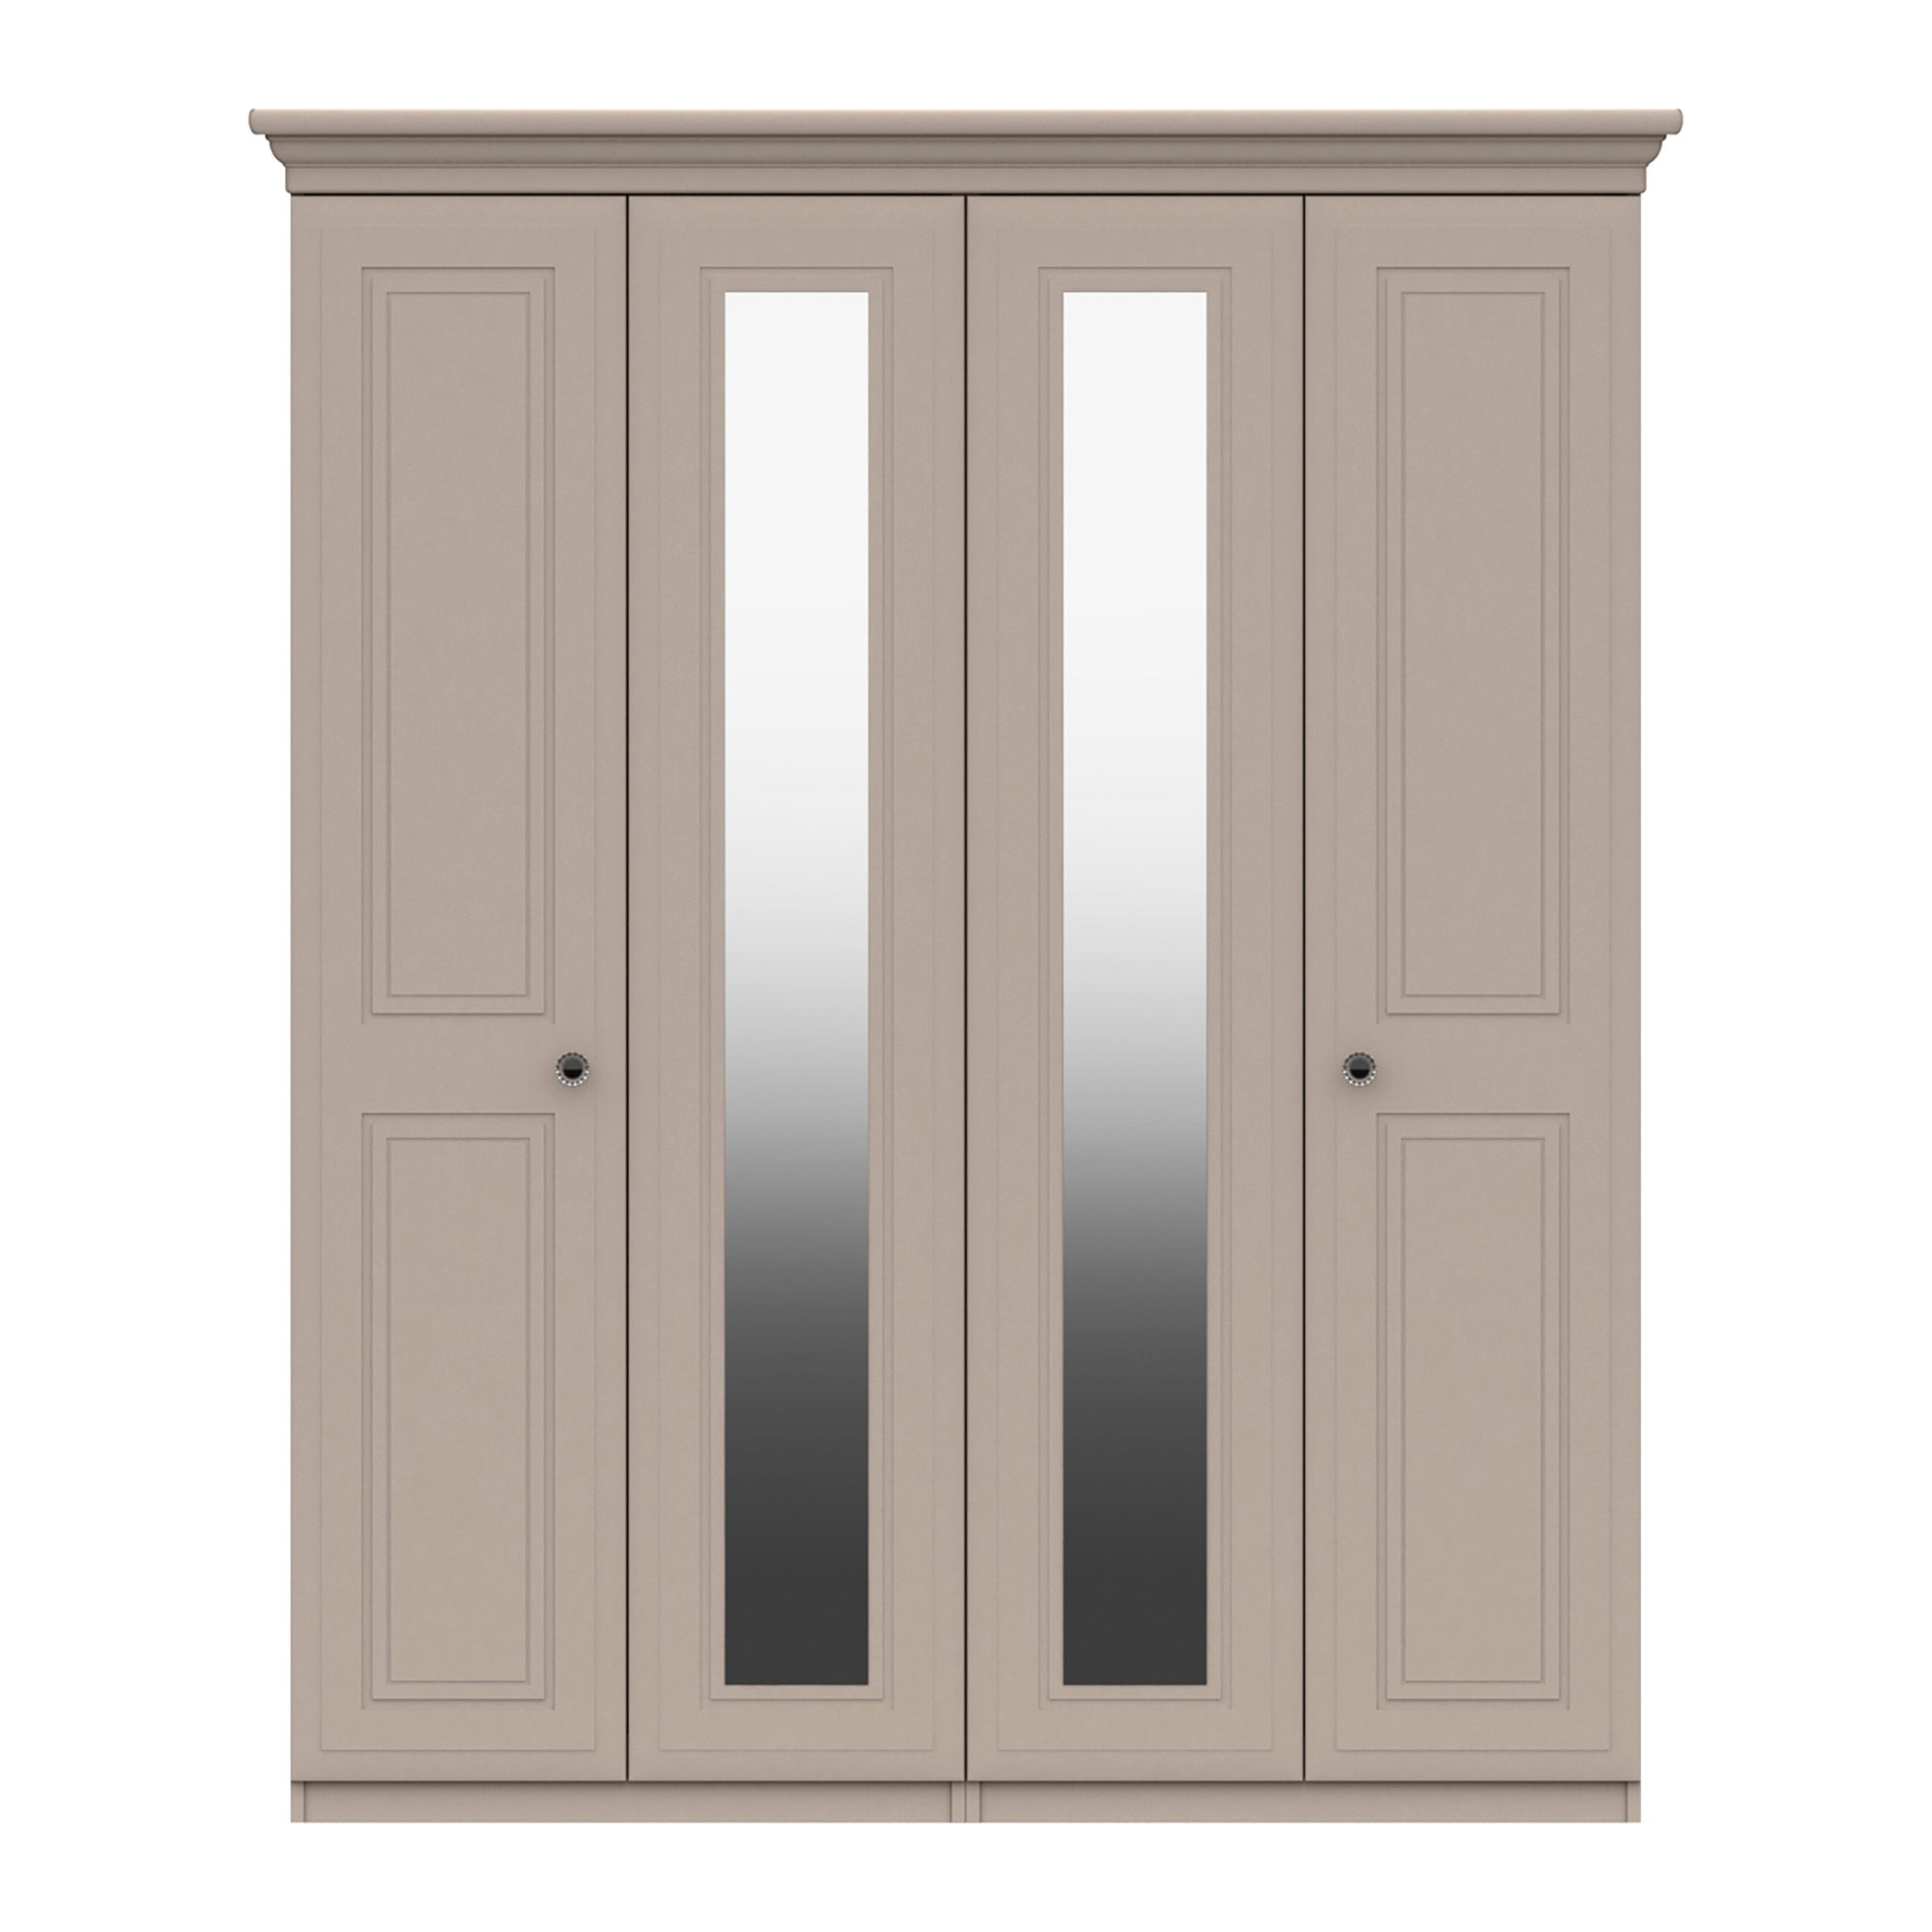 Portia 4 Door Wardrobe, Mirrored